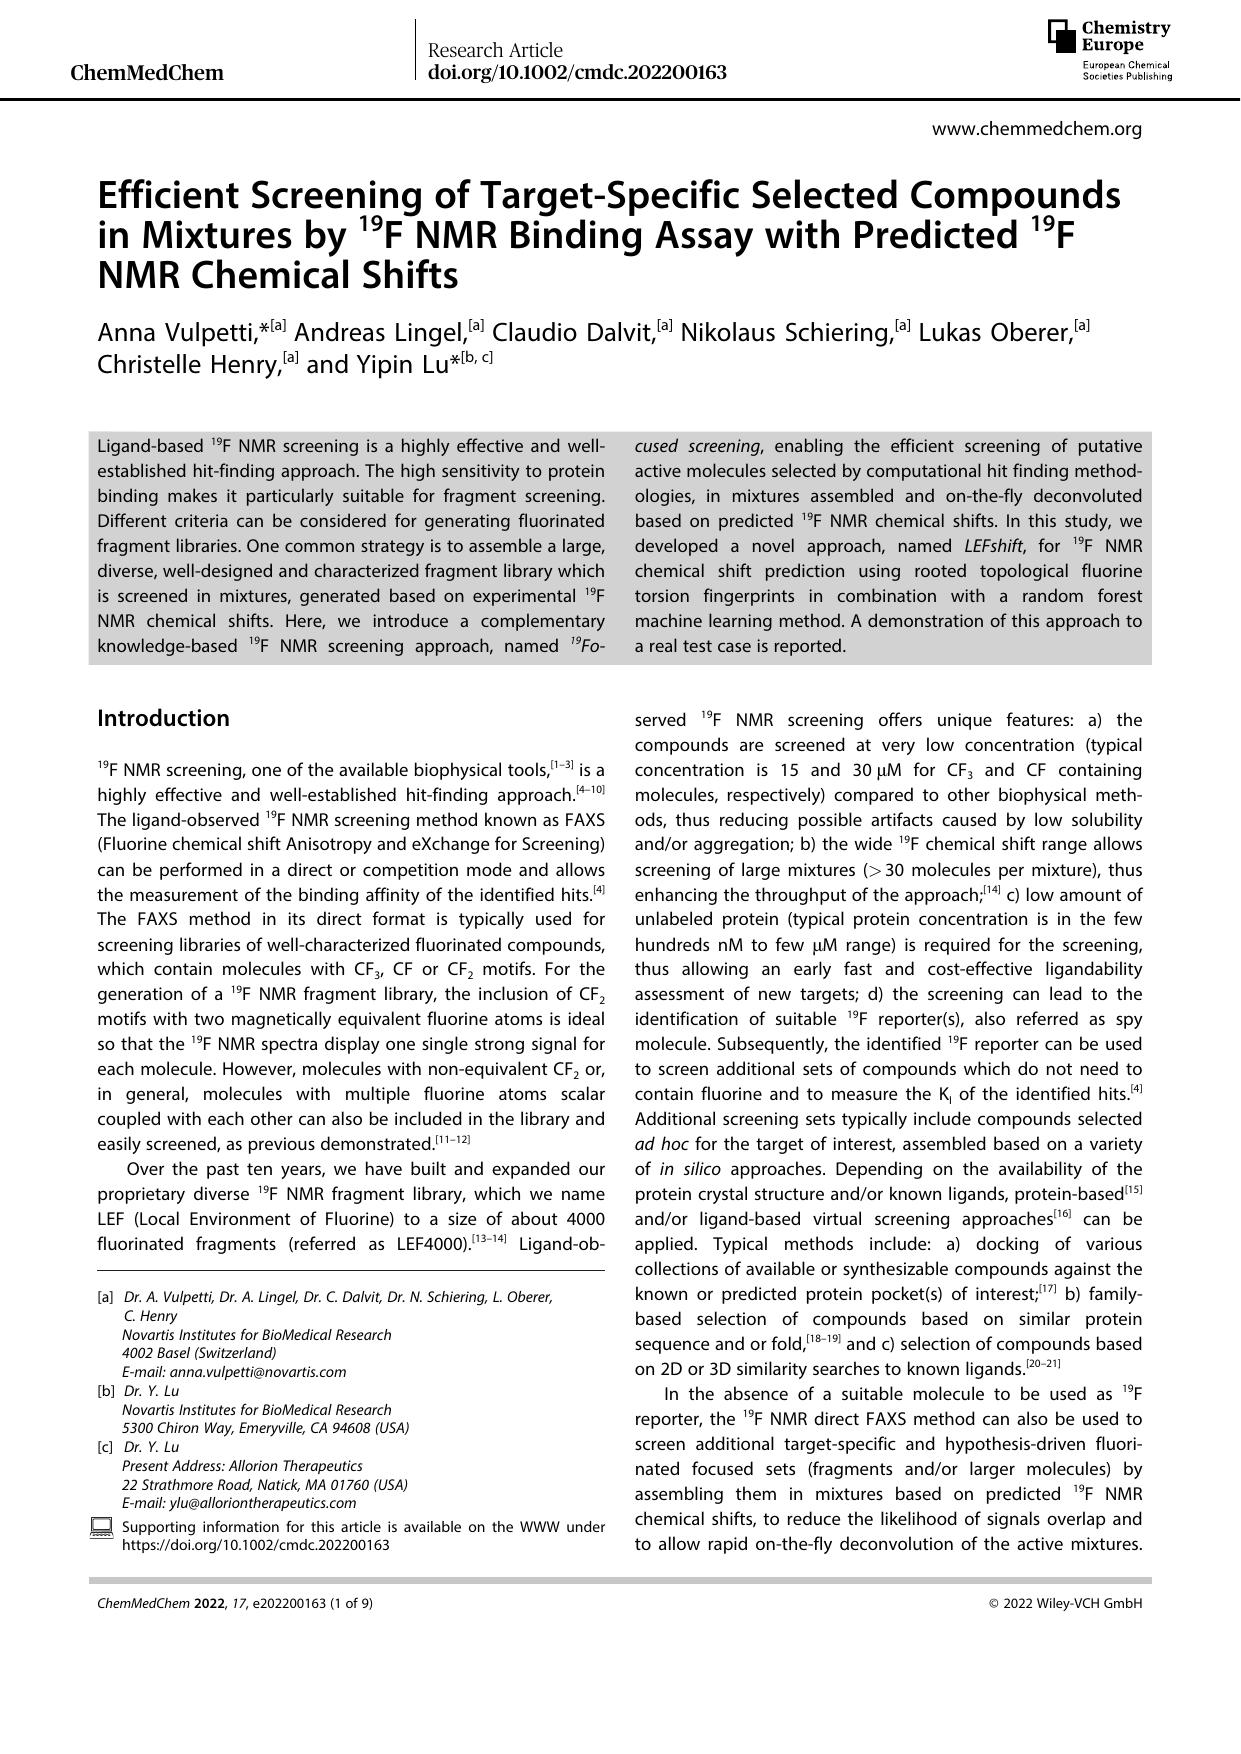 Efficient Screening of TargetâSpecific Selected Compounds in Mixtures by 19F NMR Binding Assay with Predicted 19F NMR Chemical Shifts by Unknown